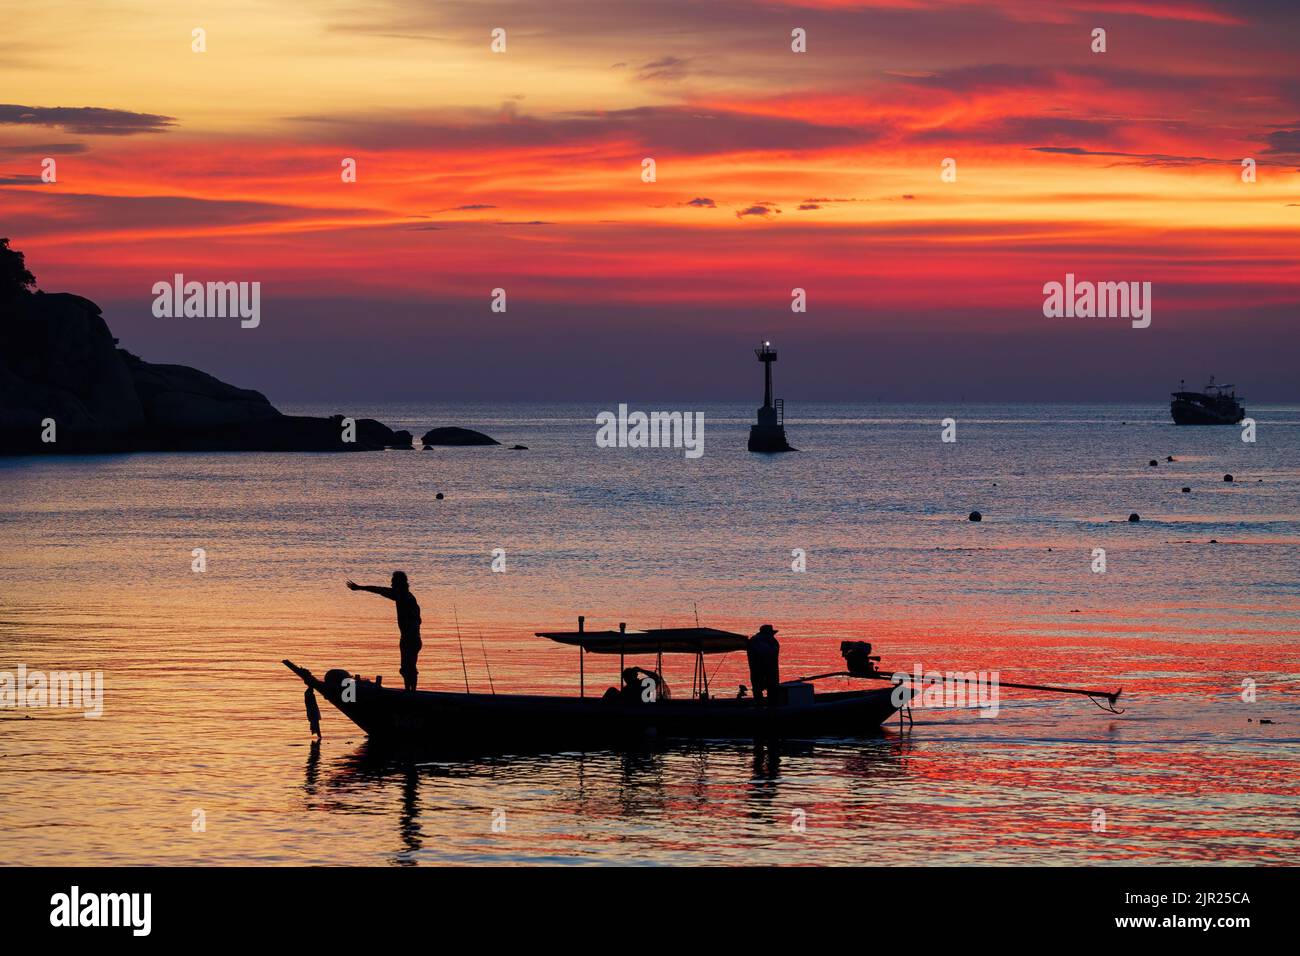 Colorful twilight scenery over the sea in Kho Tao island, Thailand Stock Photo